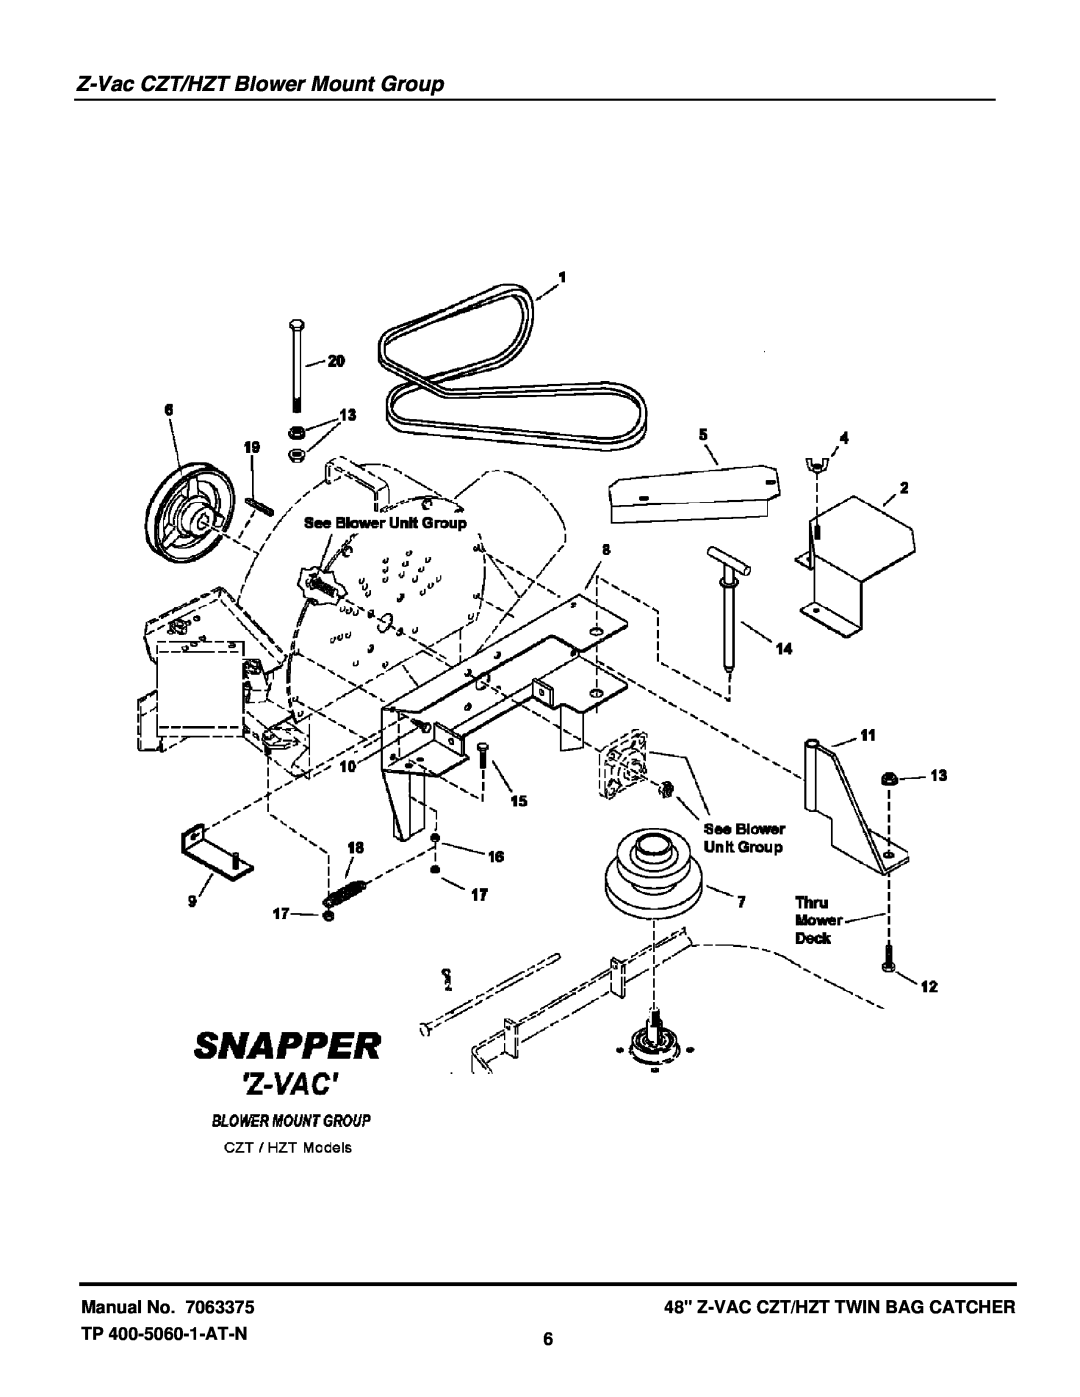 Snapper 7063375 manual Z-Vac CZT/HZT Blower Mount Group, Manual No, Z-Vac Czt/Hzt Twin Bag Catcher, TP 400-5060-1-AT-N 